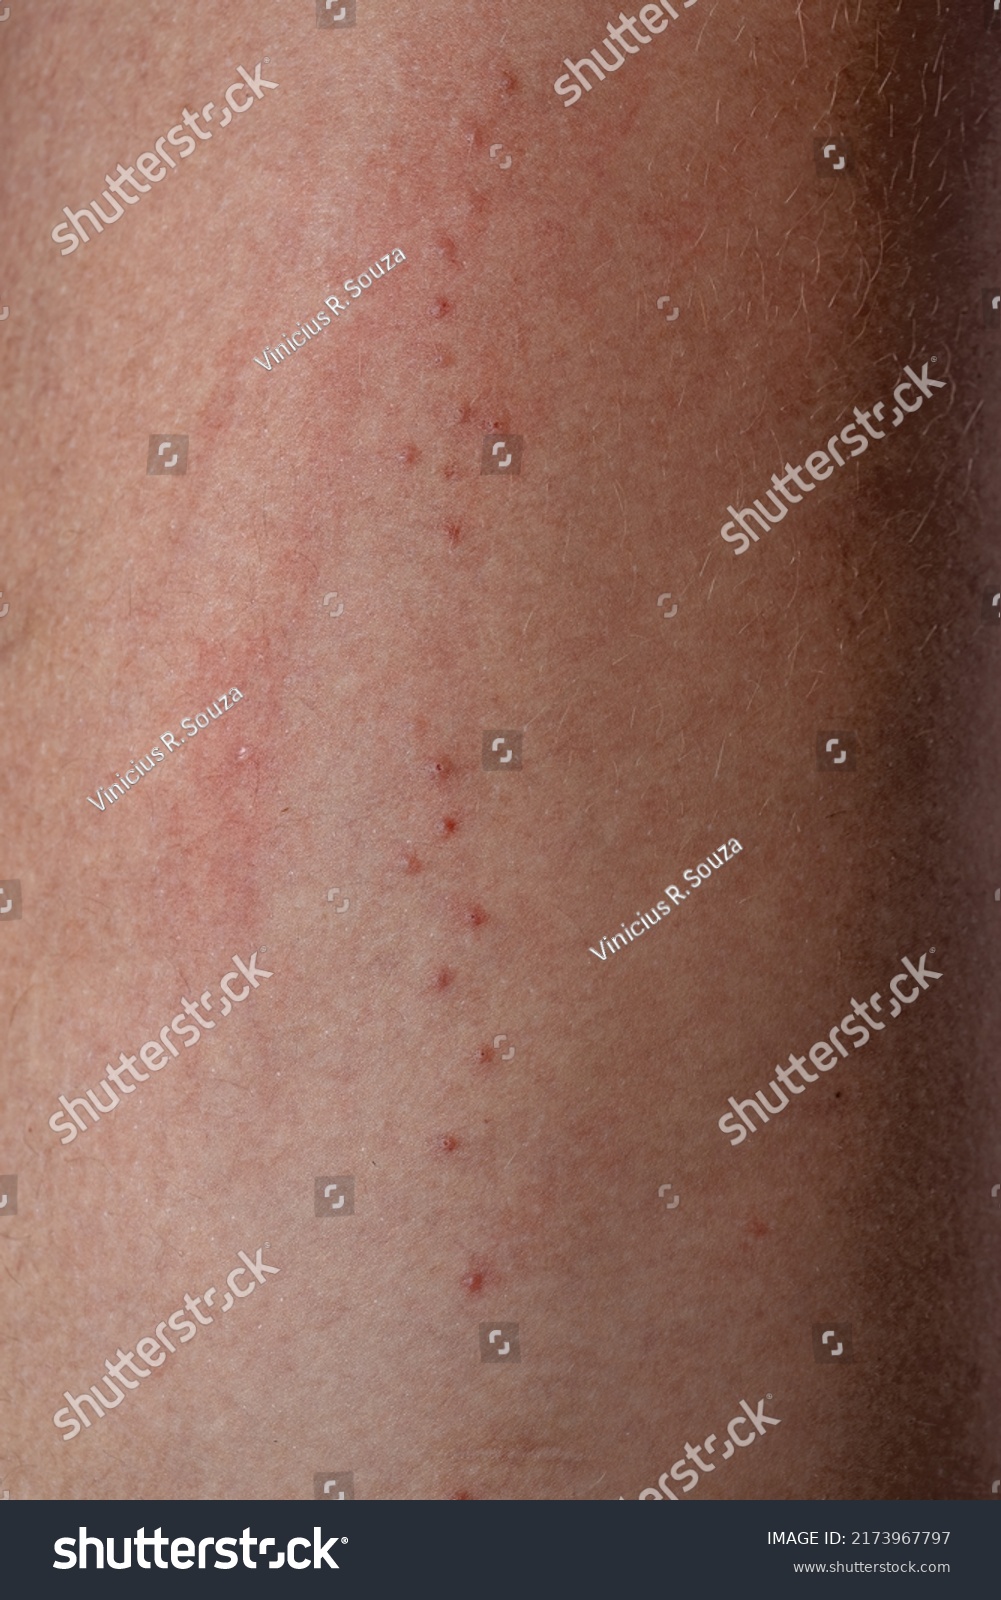 Human Skin Various Allergic Reactions Tick Stock Photo 2173967797